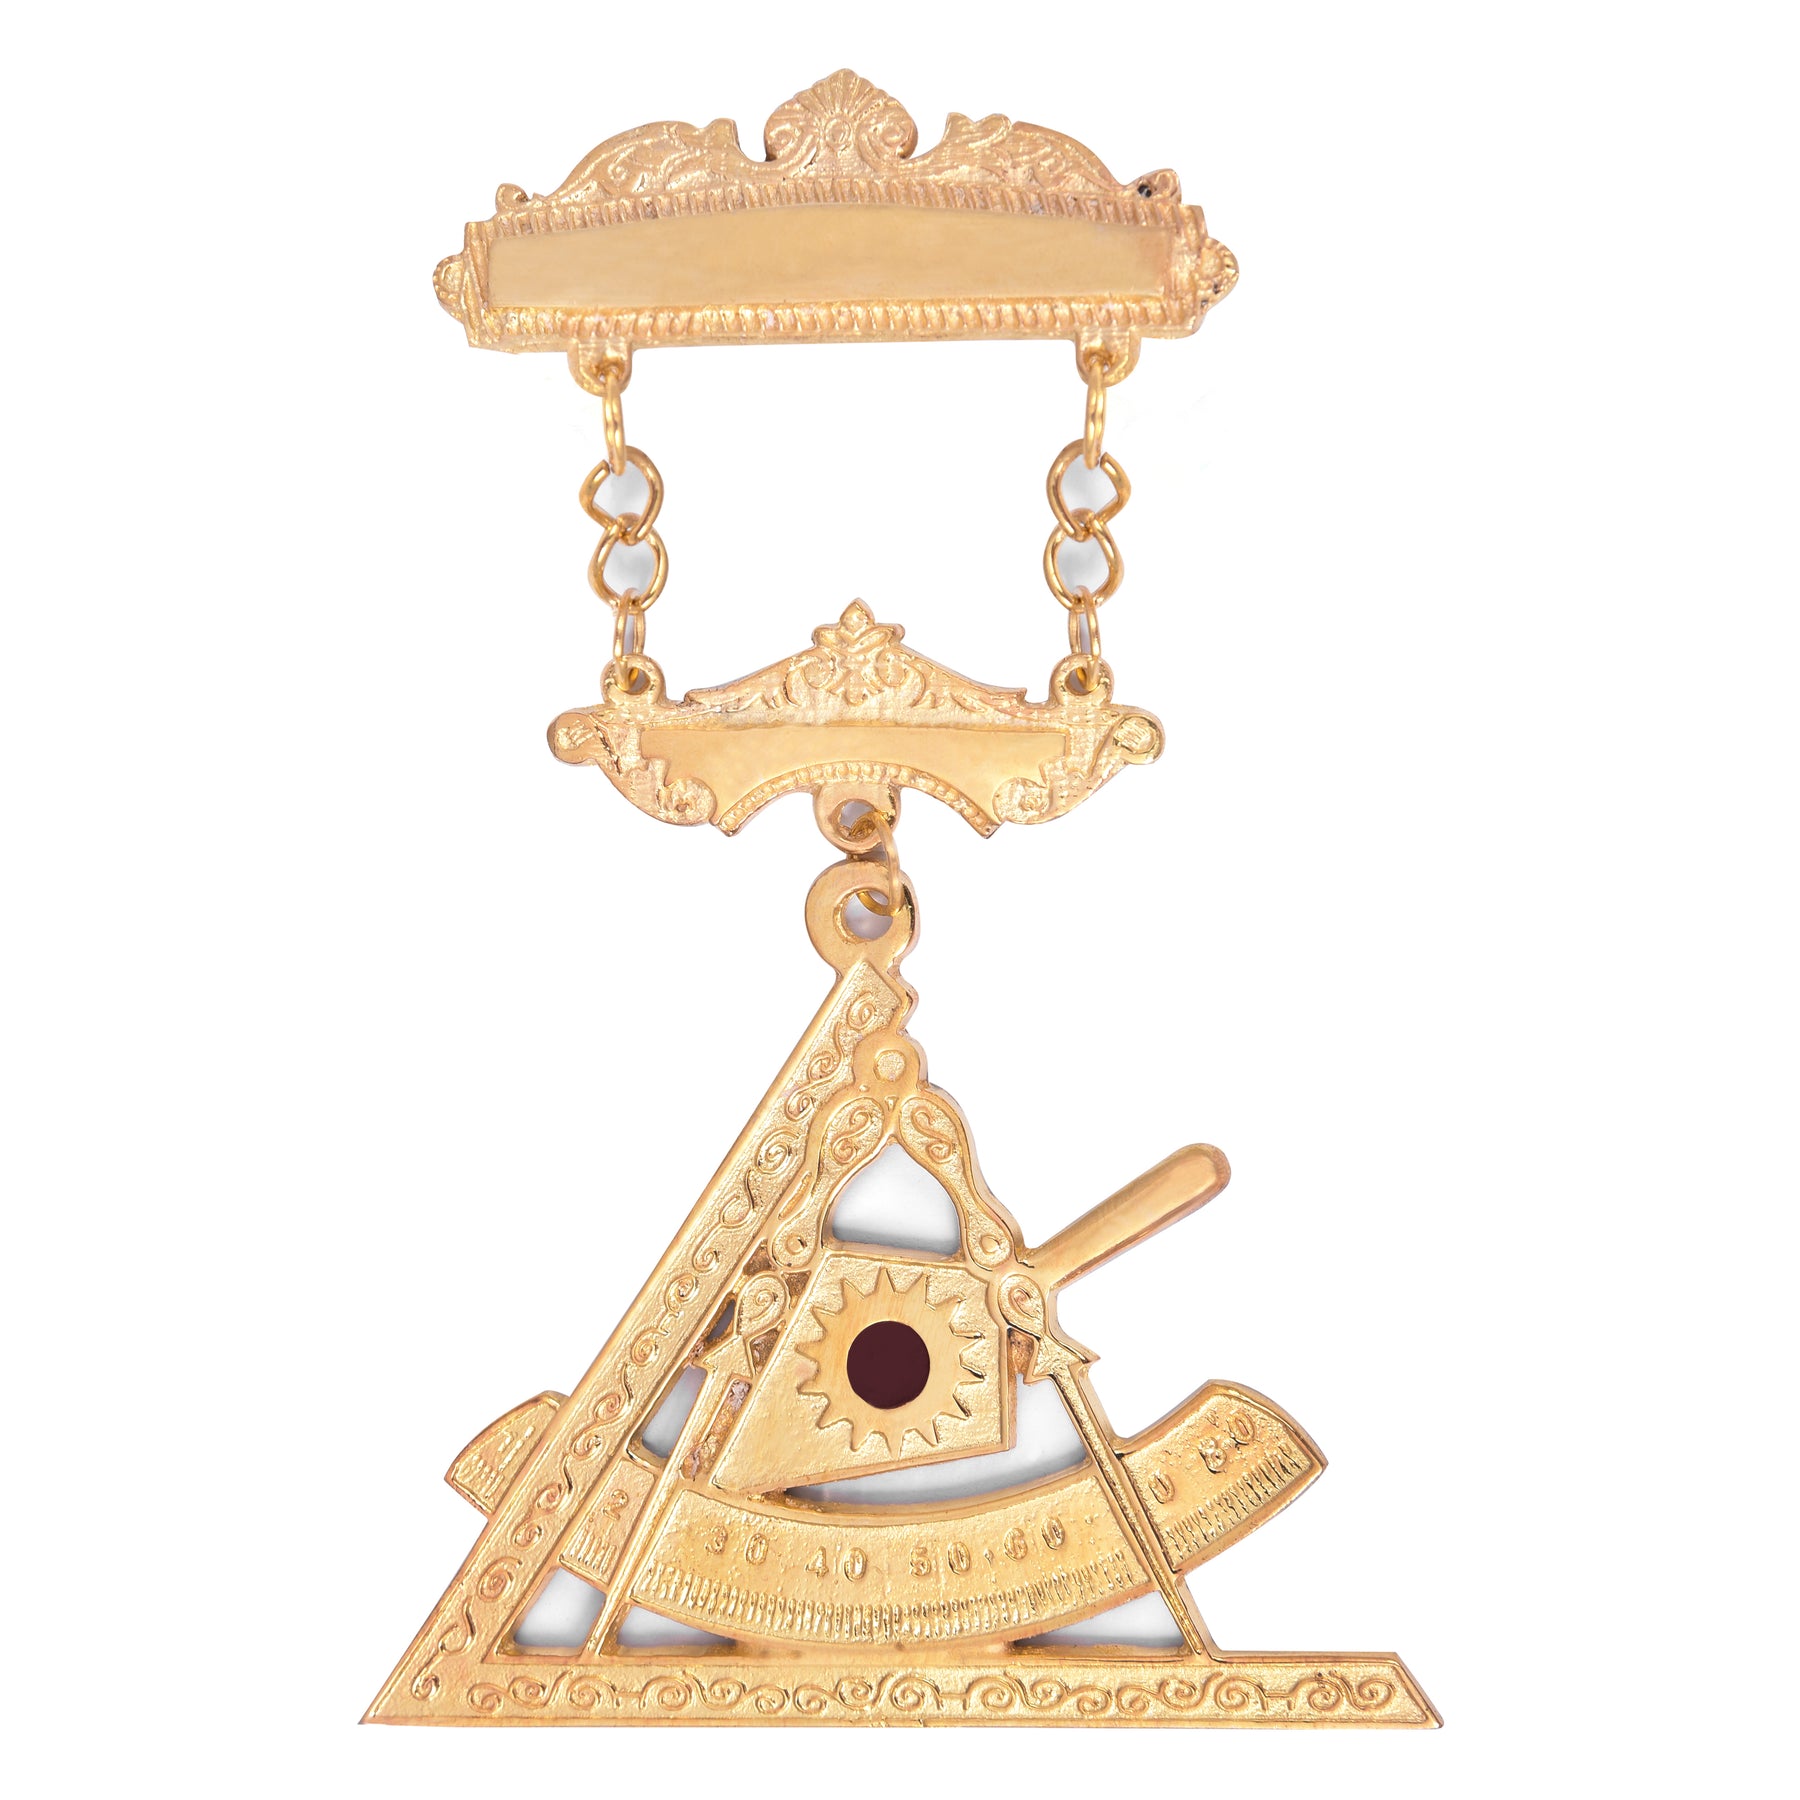 Past Illustrious Master Council Breast Jewel - Gold With Engravable Bar - Bricks Masons